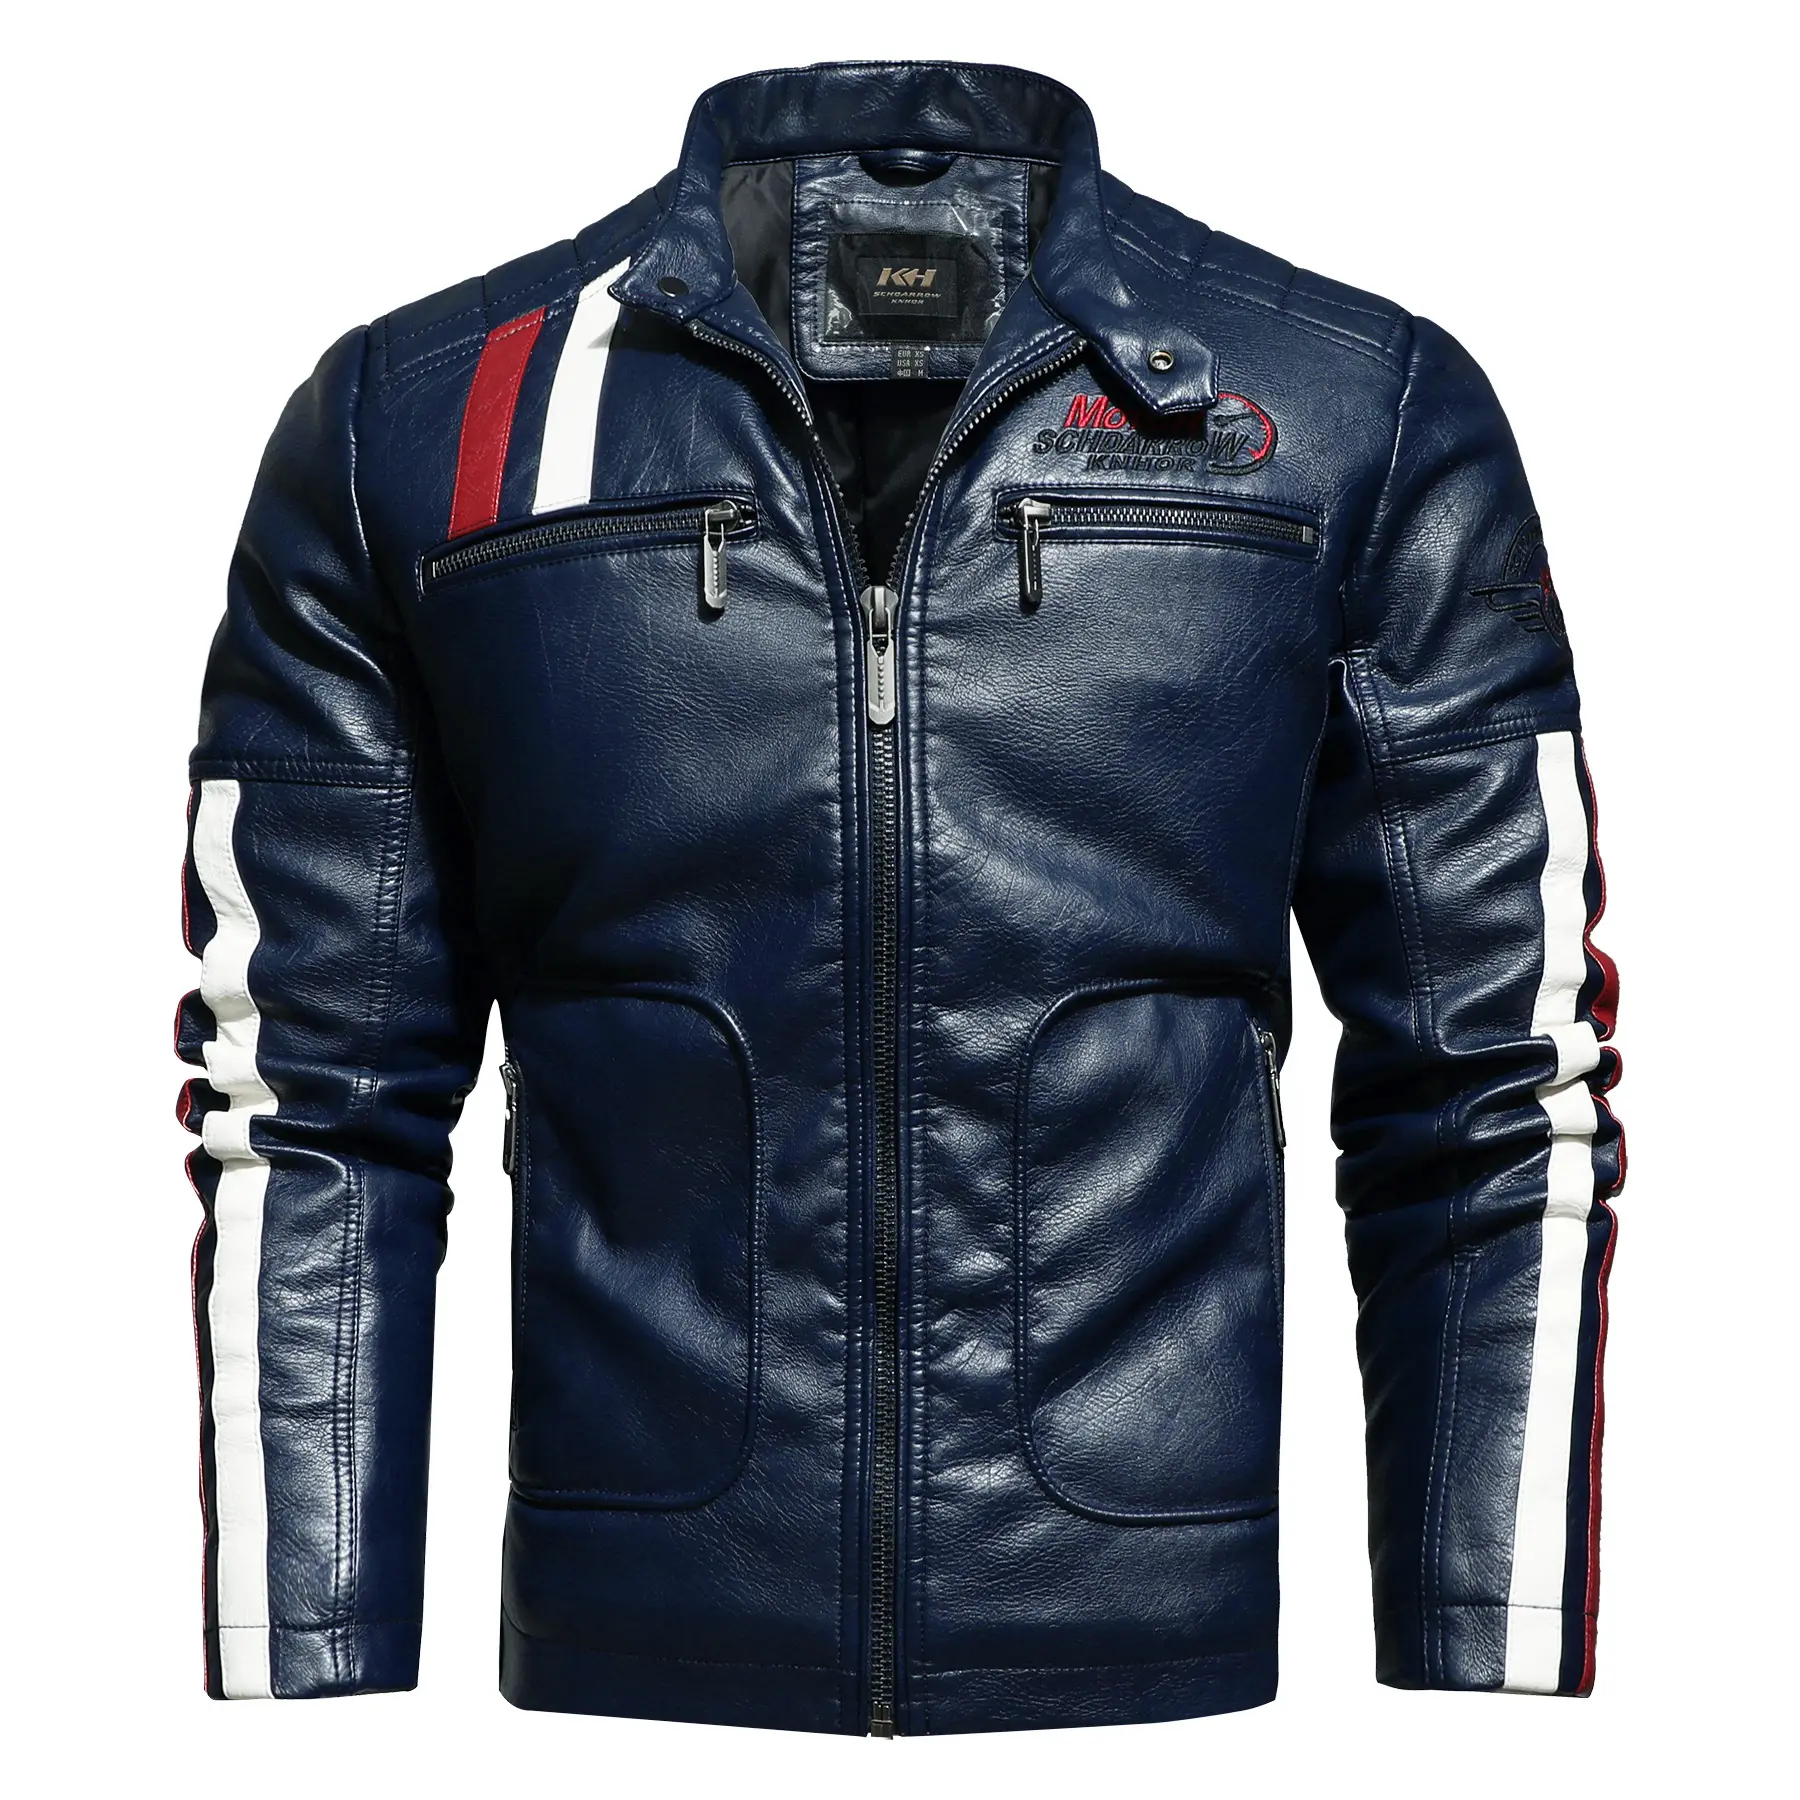 Jaqueta de couro masculina para motociclista angustiado couro de cordeiro genuíno Top Quality Material parka jaquetas masculinas